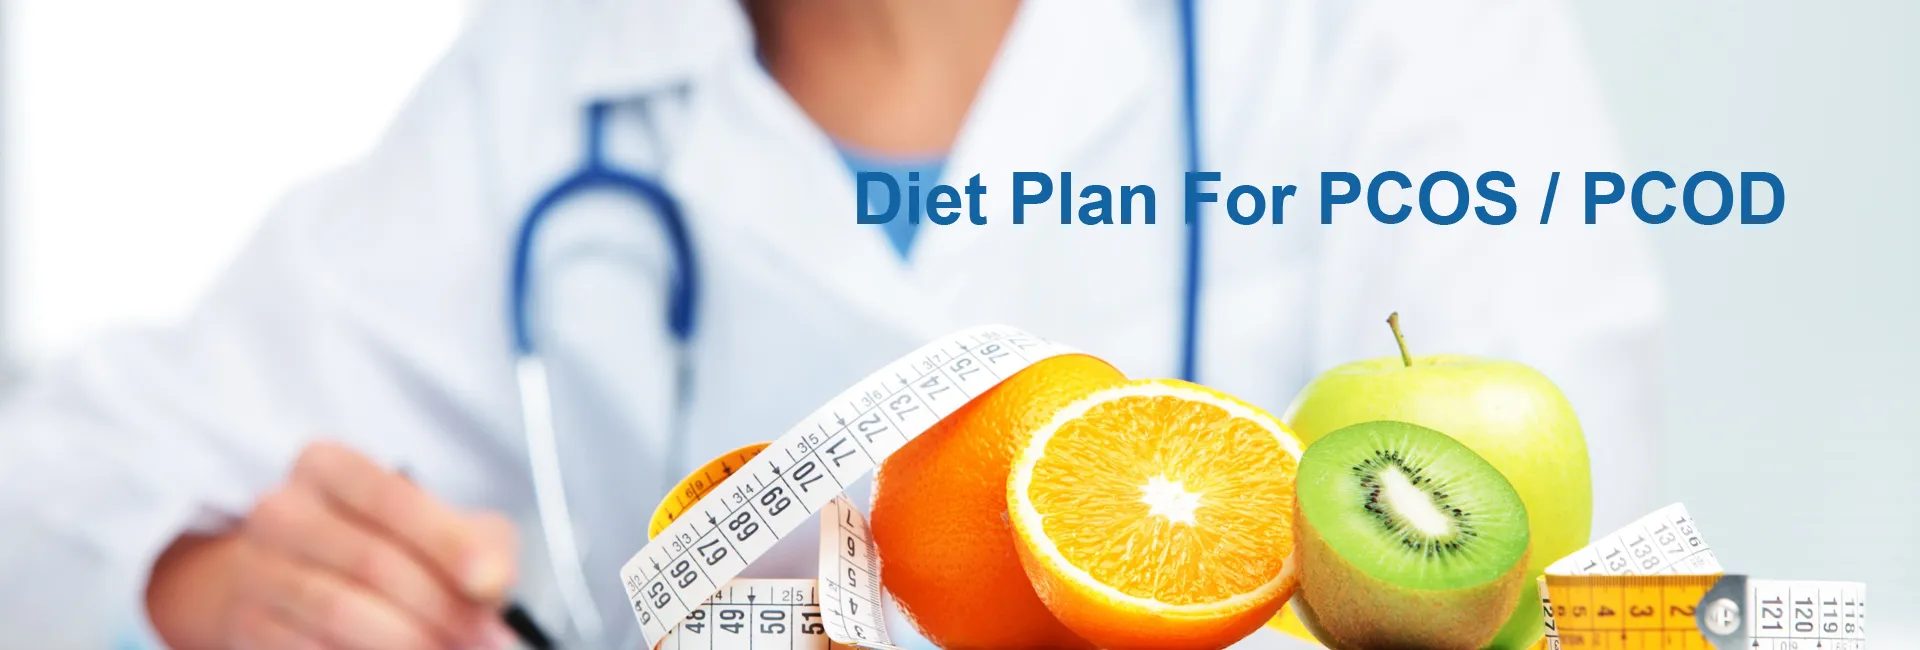 Diet Plan For PCOS / PCOD In Ras Al Khaimah